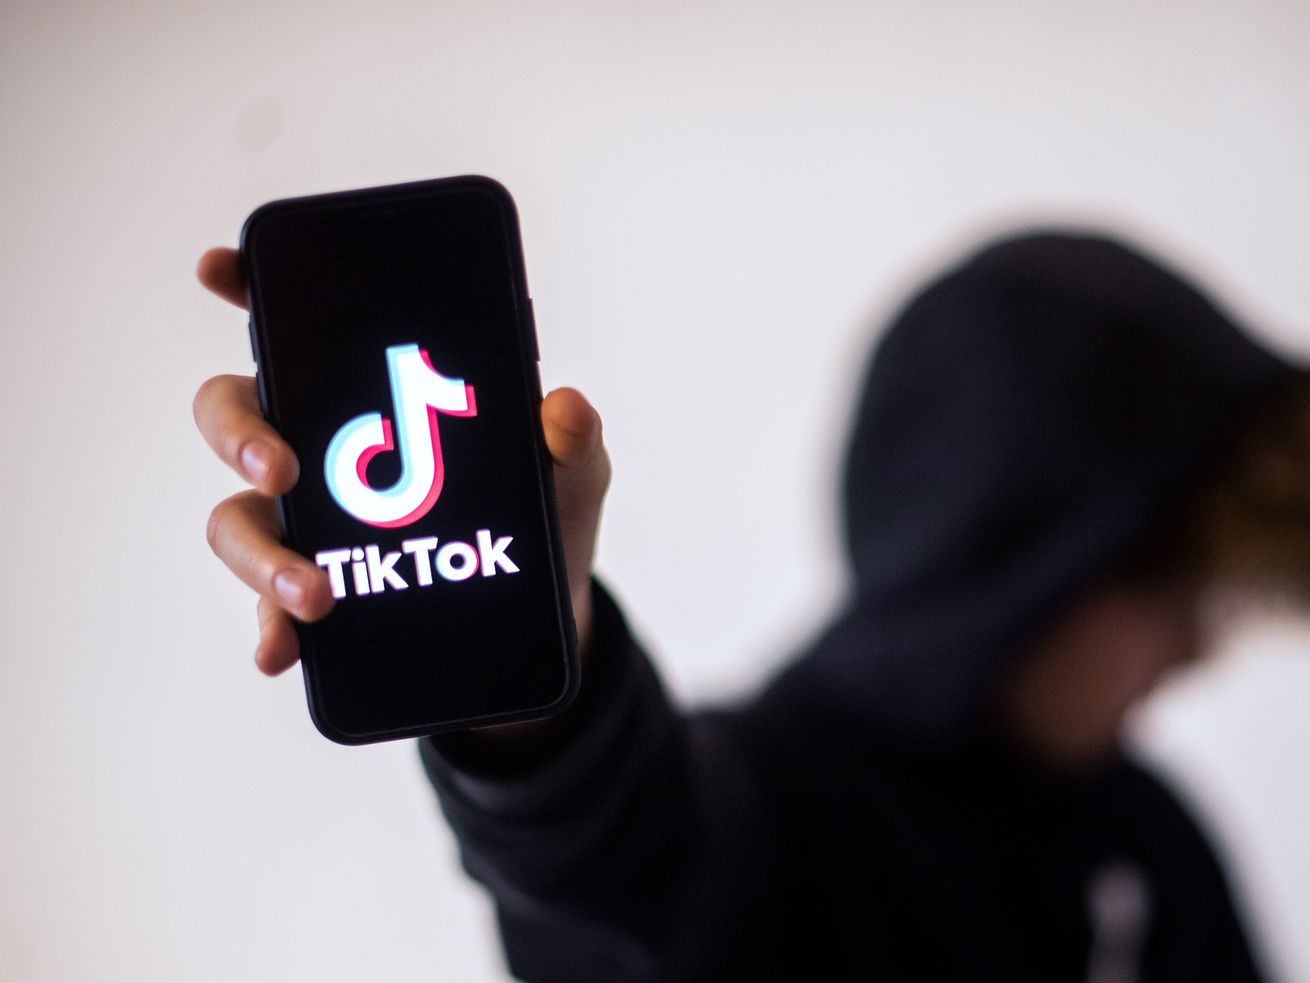 TikTok surprises users by making personalized ads mandatory